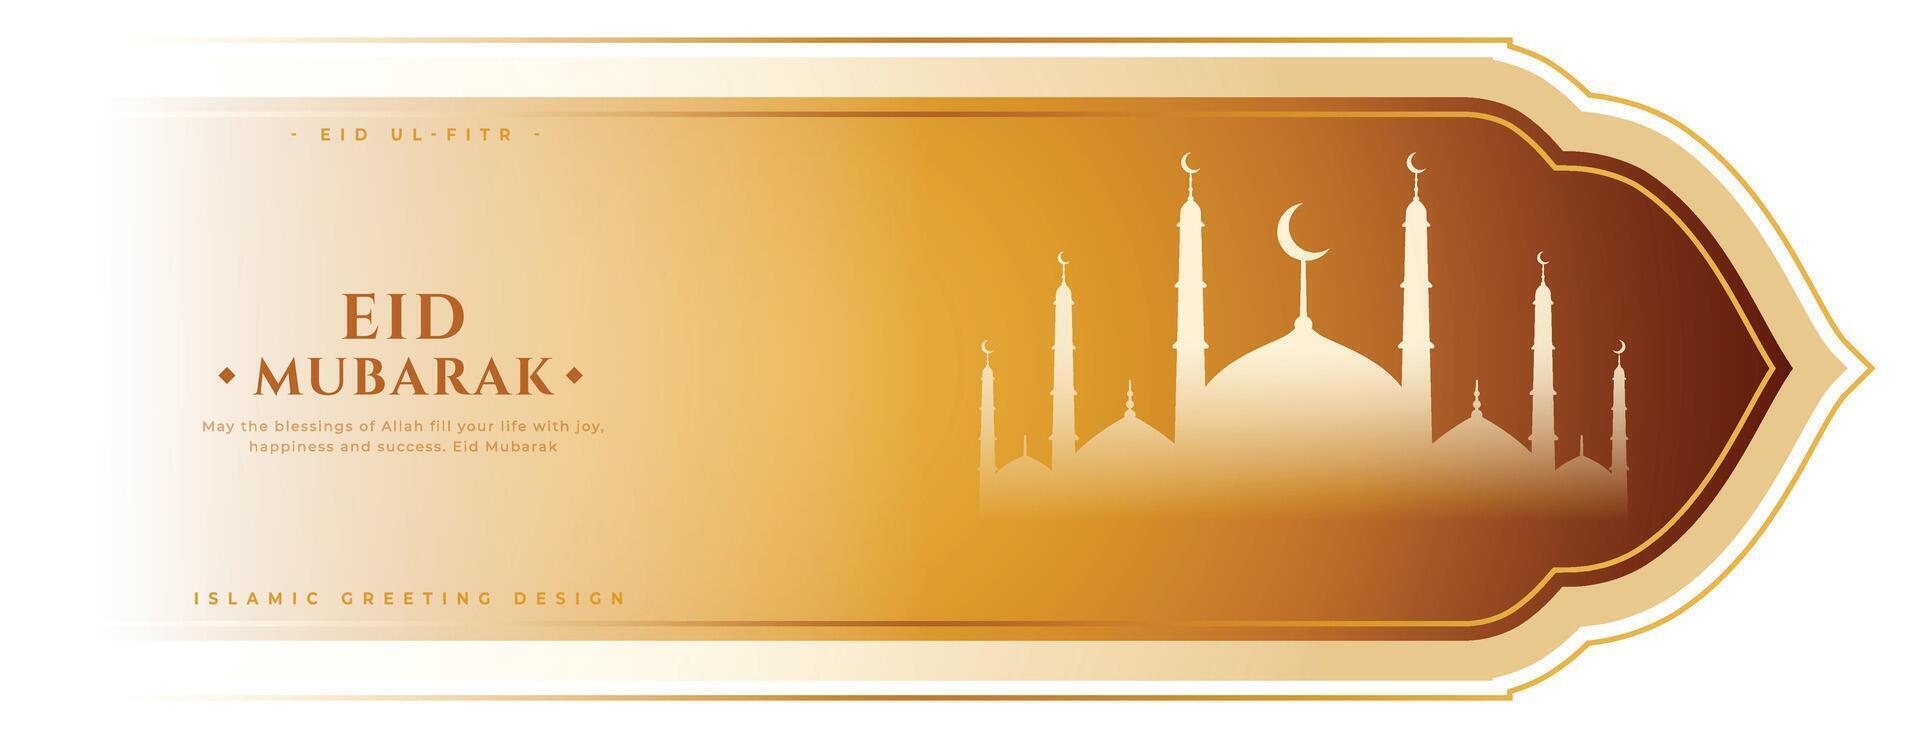 eid mubarak religious wallpaper with religious symbol vector